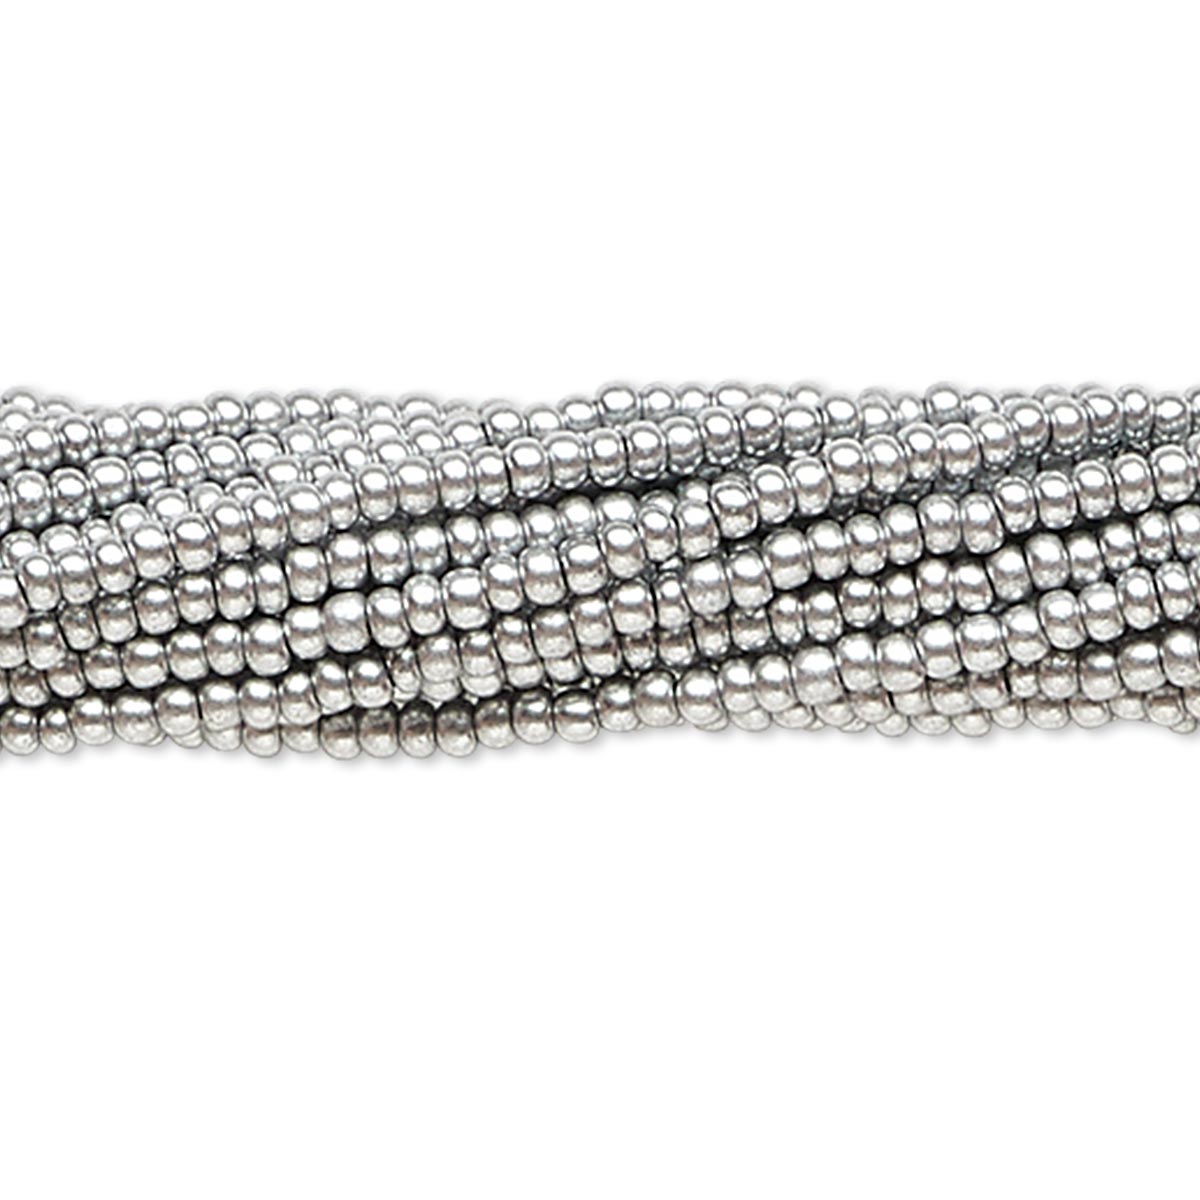 Seed bead, Preciosa, Czech glass, opaque satin metallic silver, #11